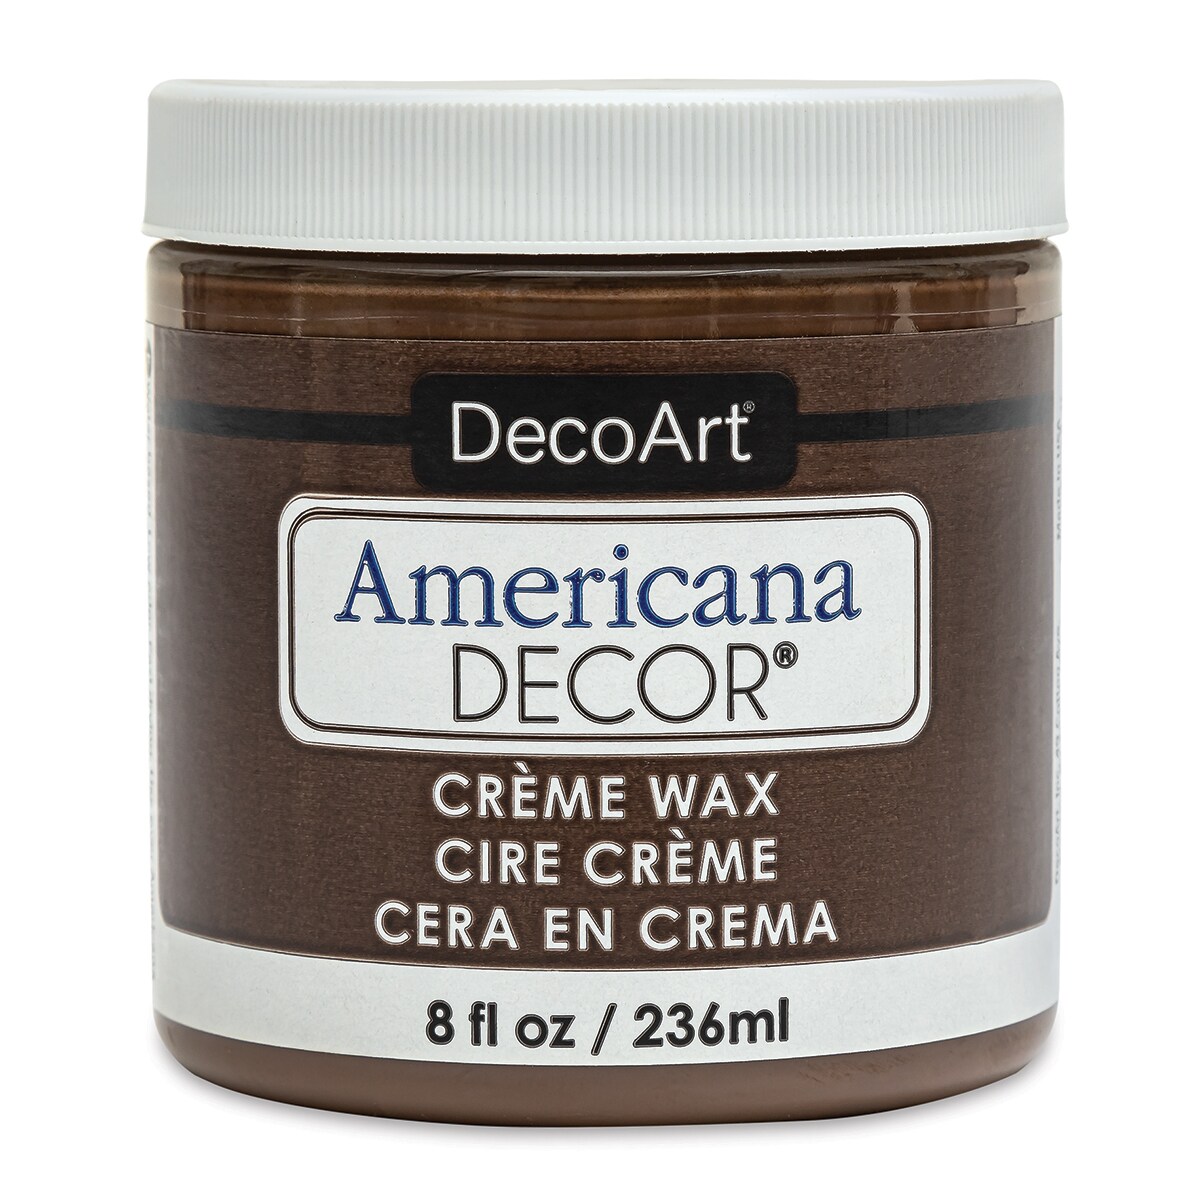 DecoArt Americana Decor Creme Wax - Deep Brown, 8 oz jar